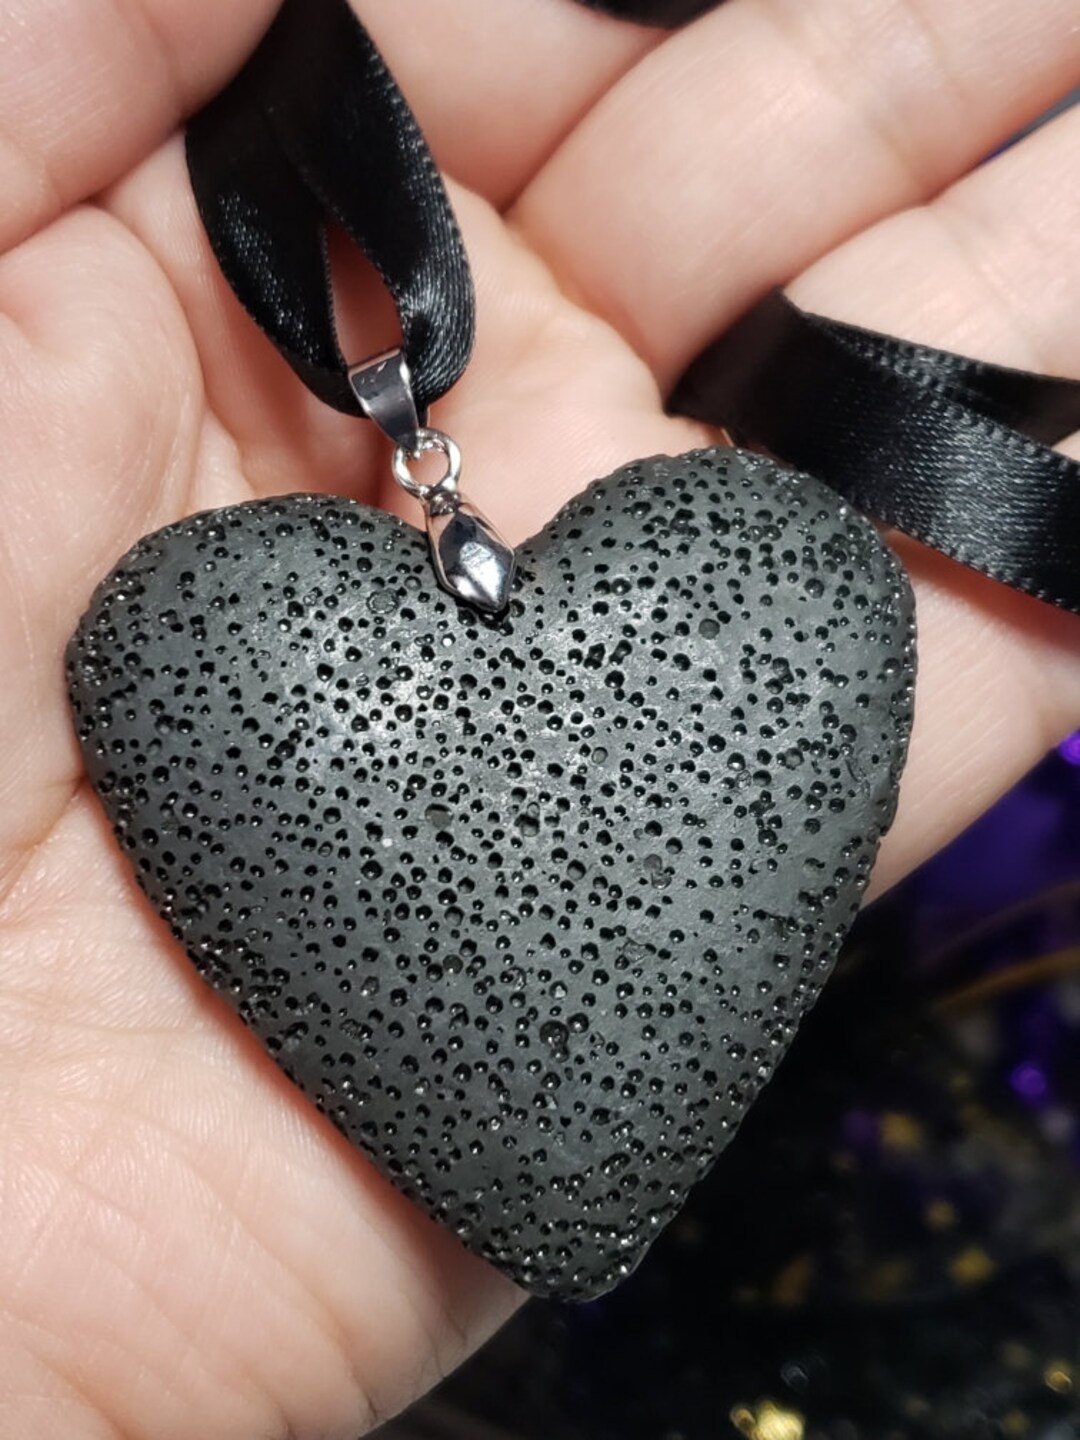 Grand Black Heart Ribbon Necklace